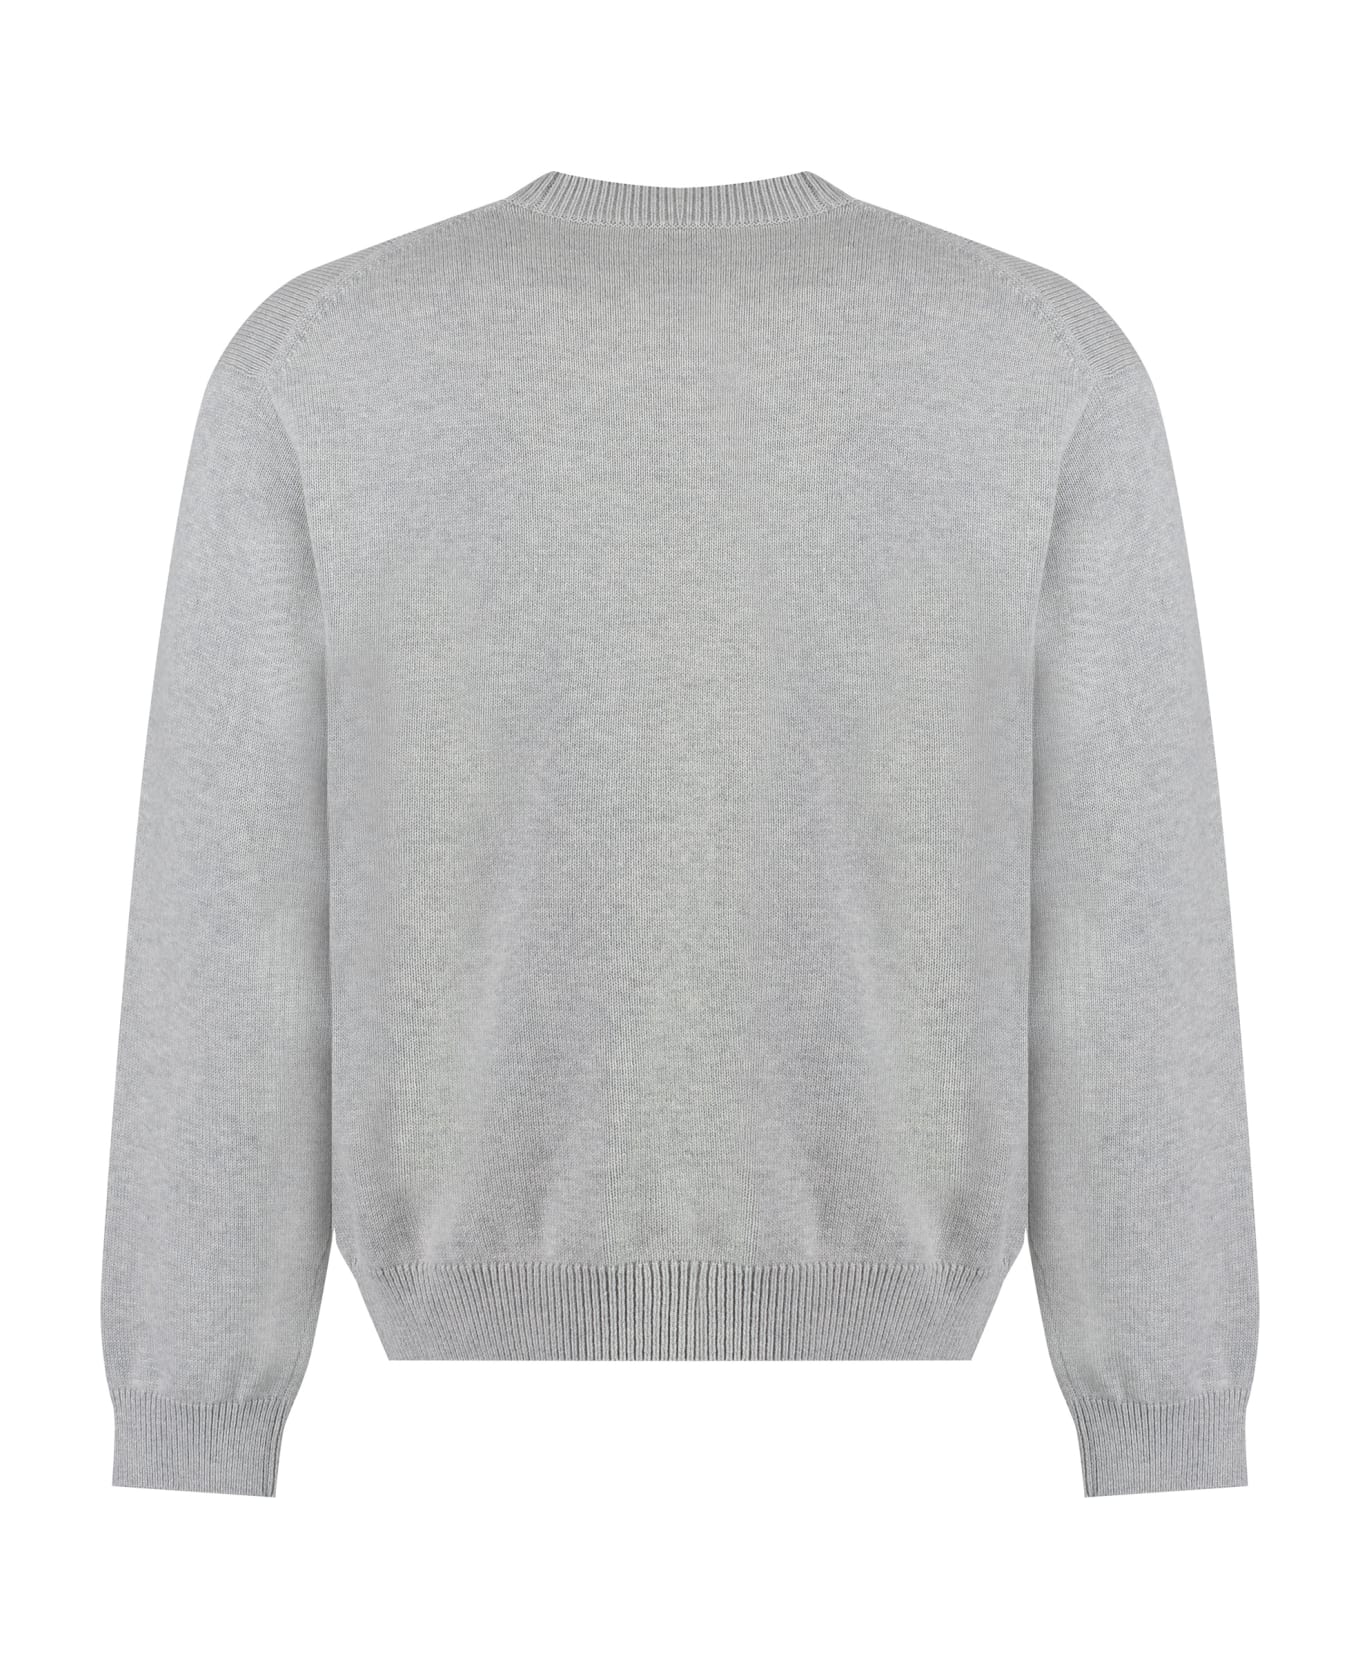 Kenzo Wool-blend Crew-neck Sweater - grey